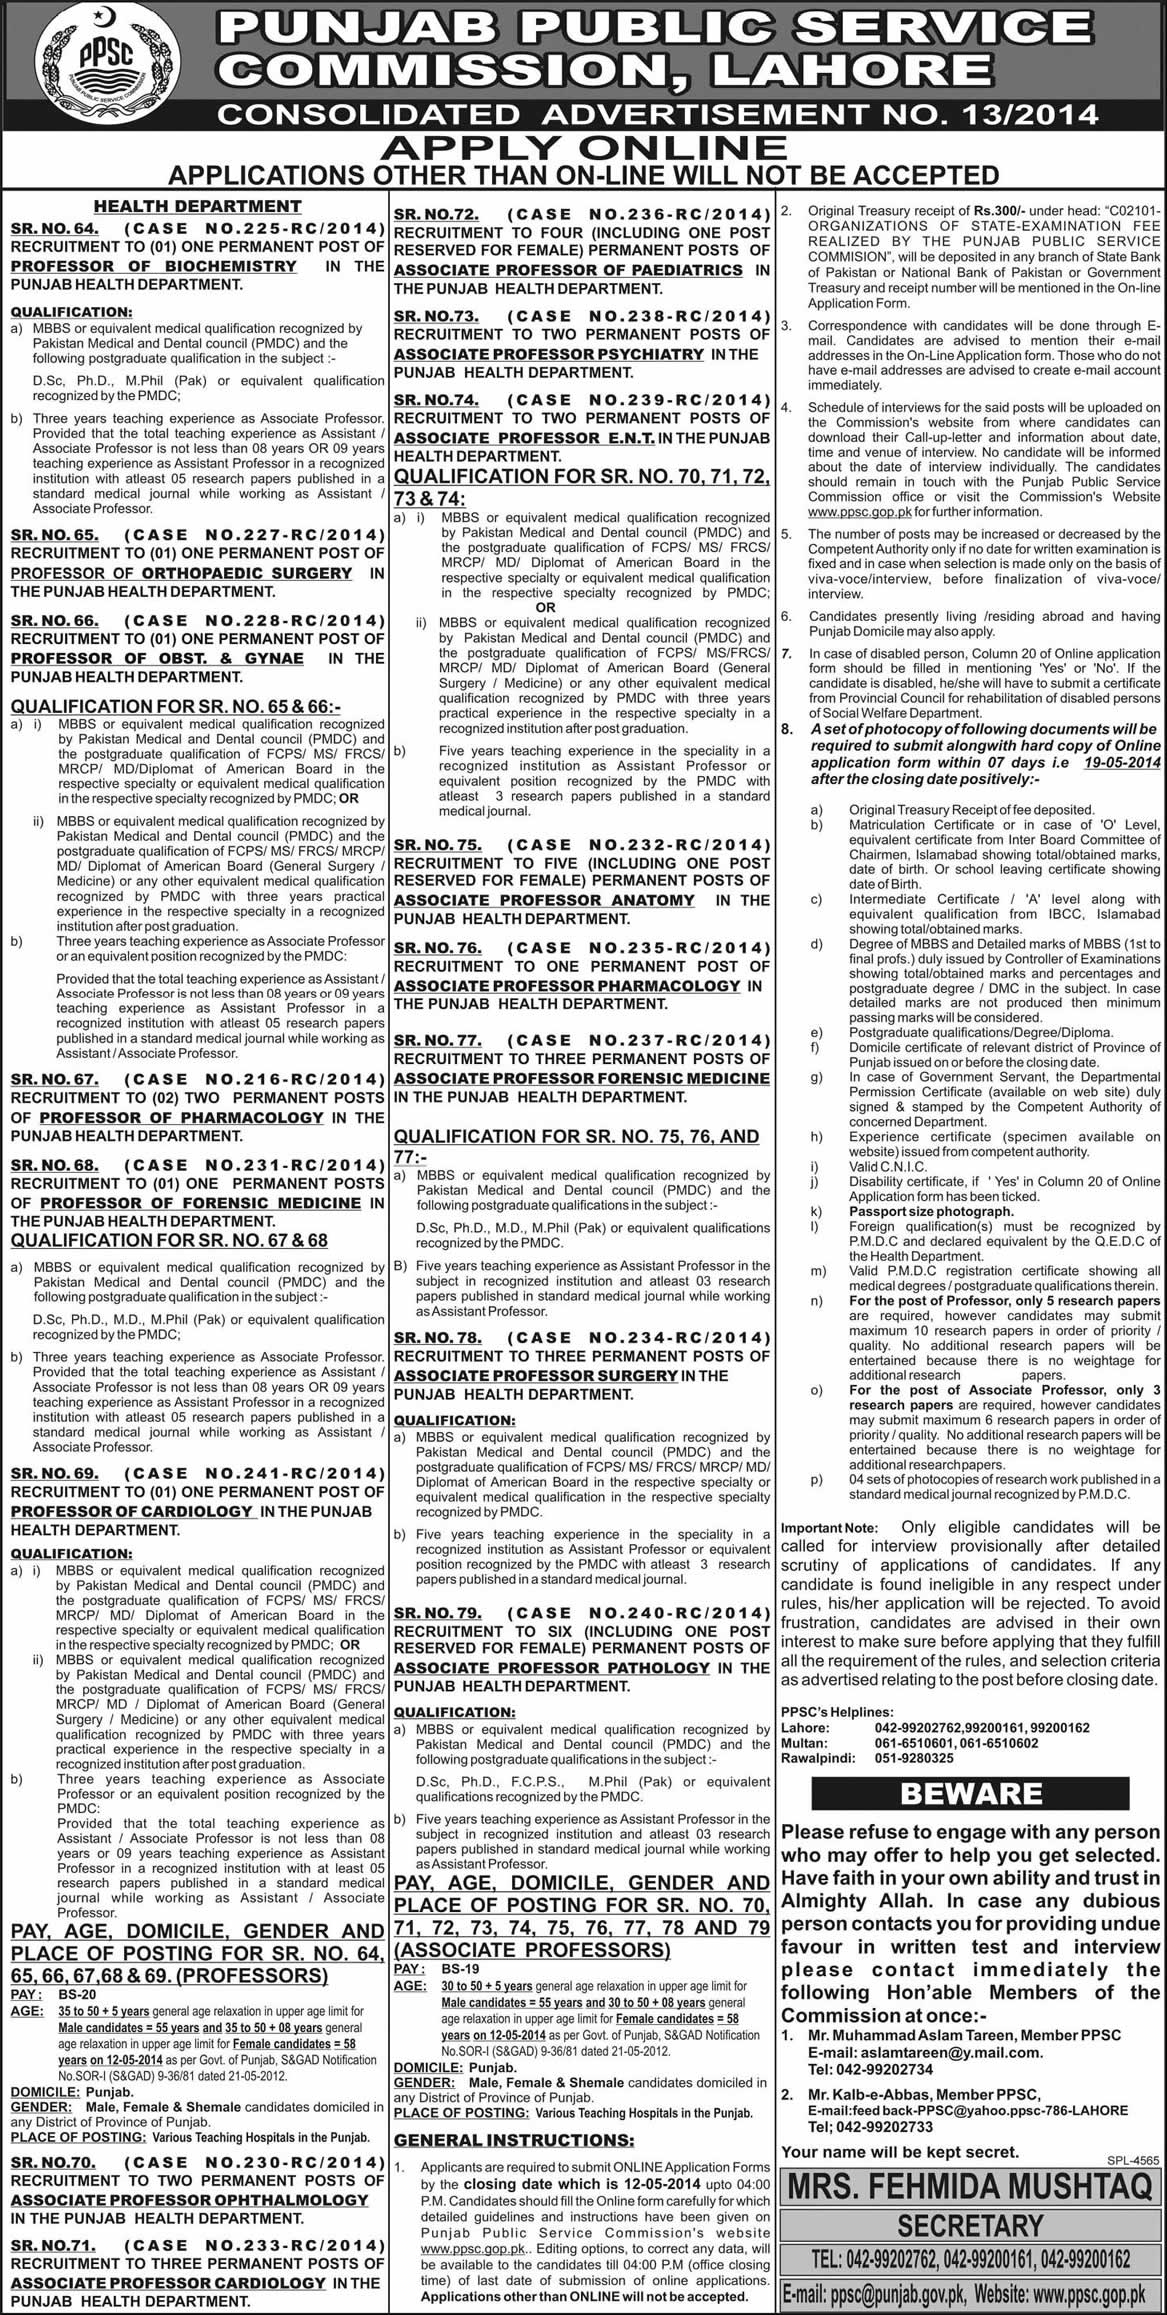 PPSC Jobs April 2014 in Punjab Health Department Advertisement No 13/2014